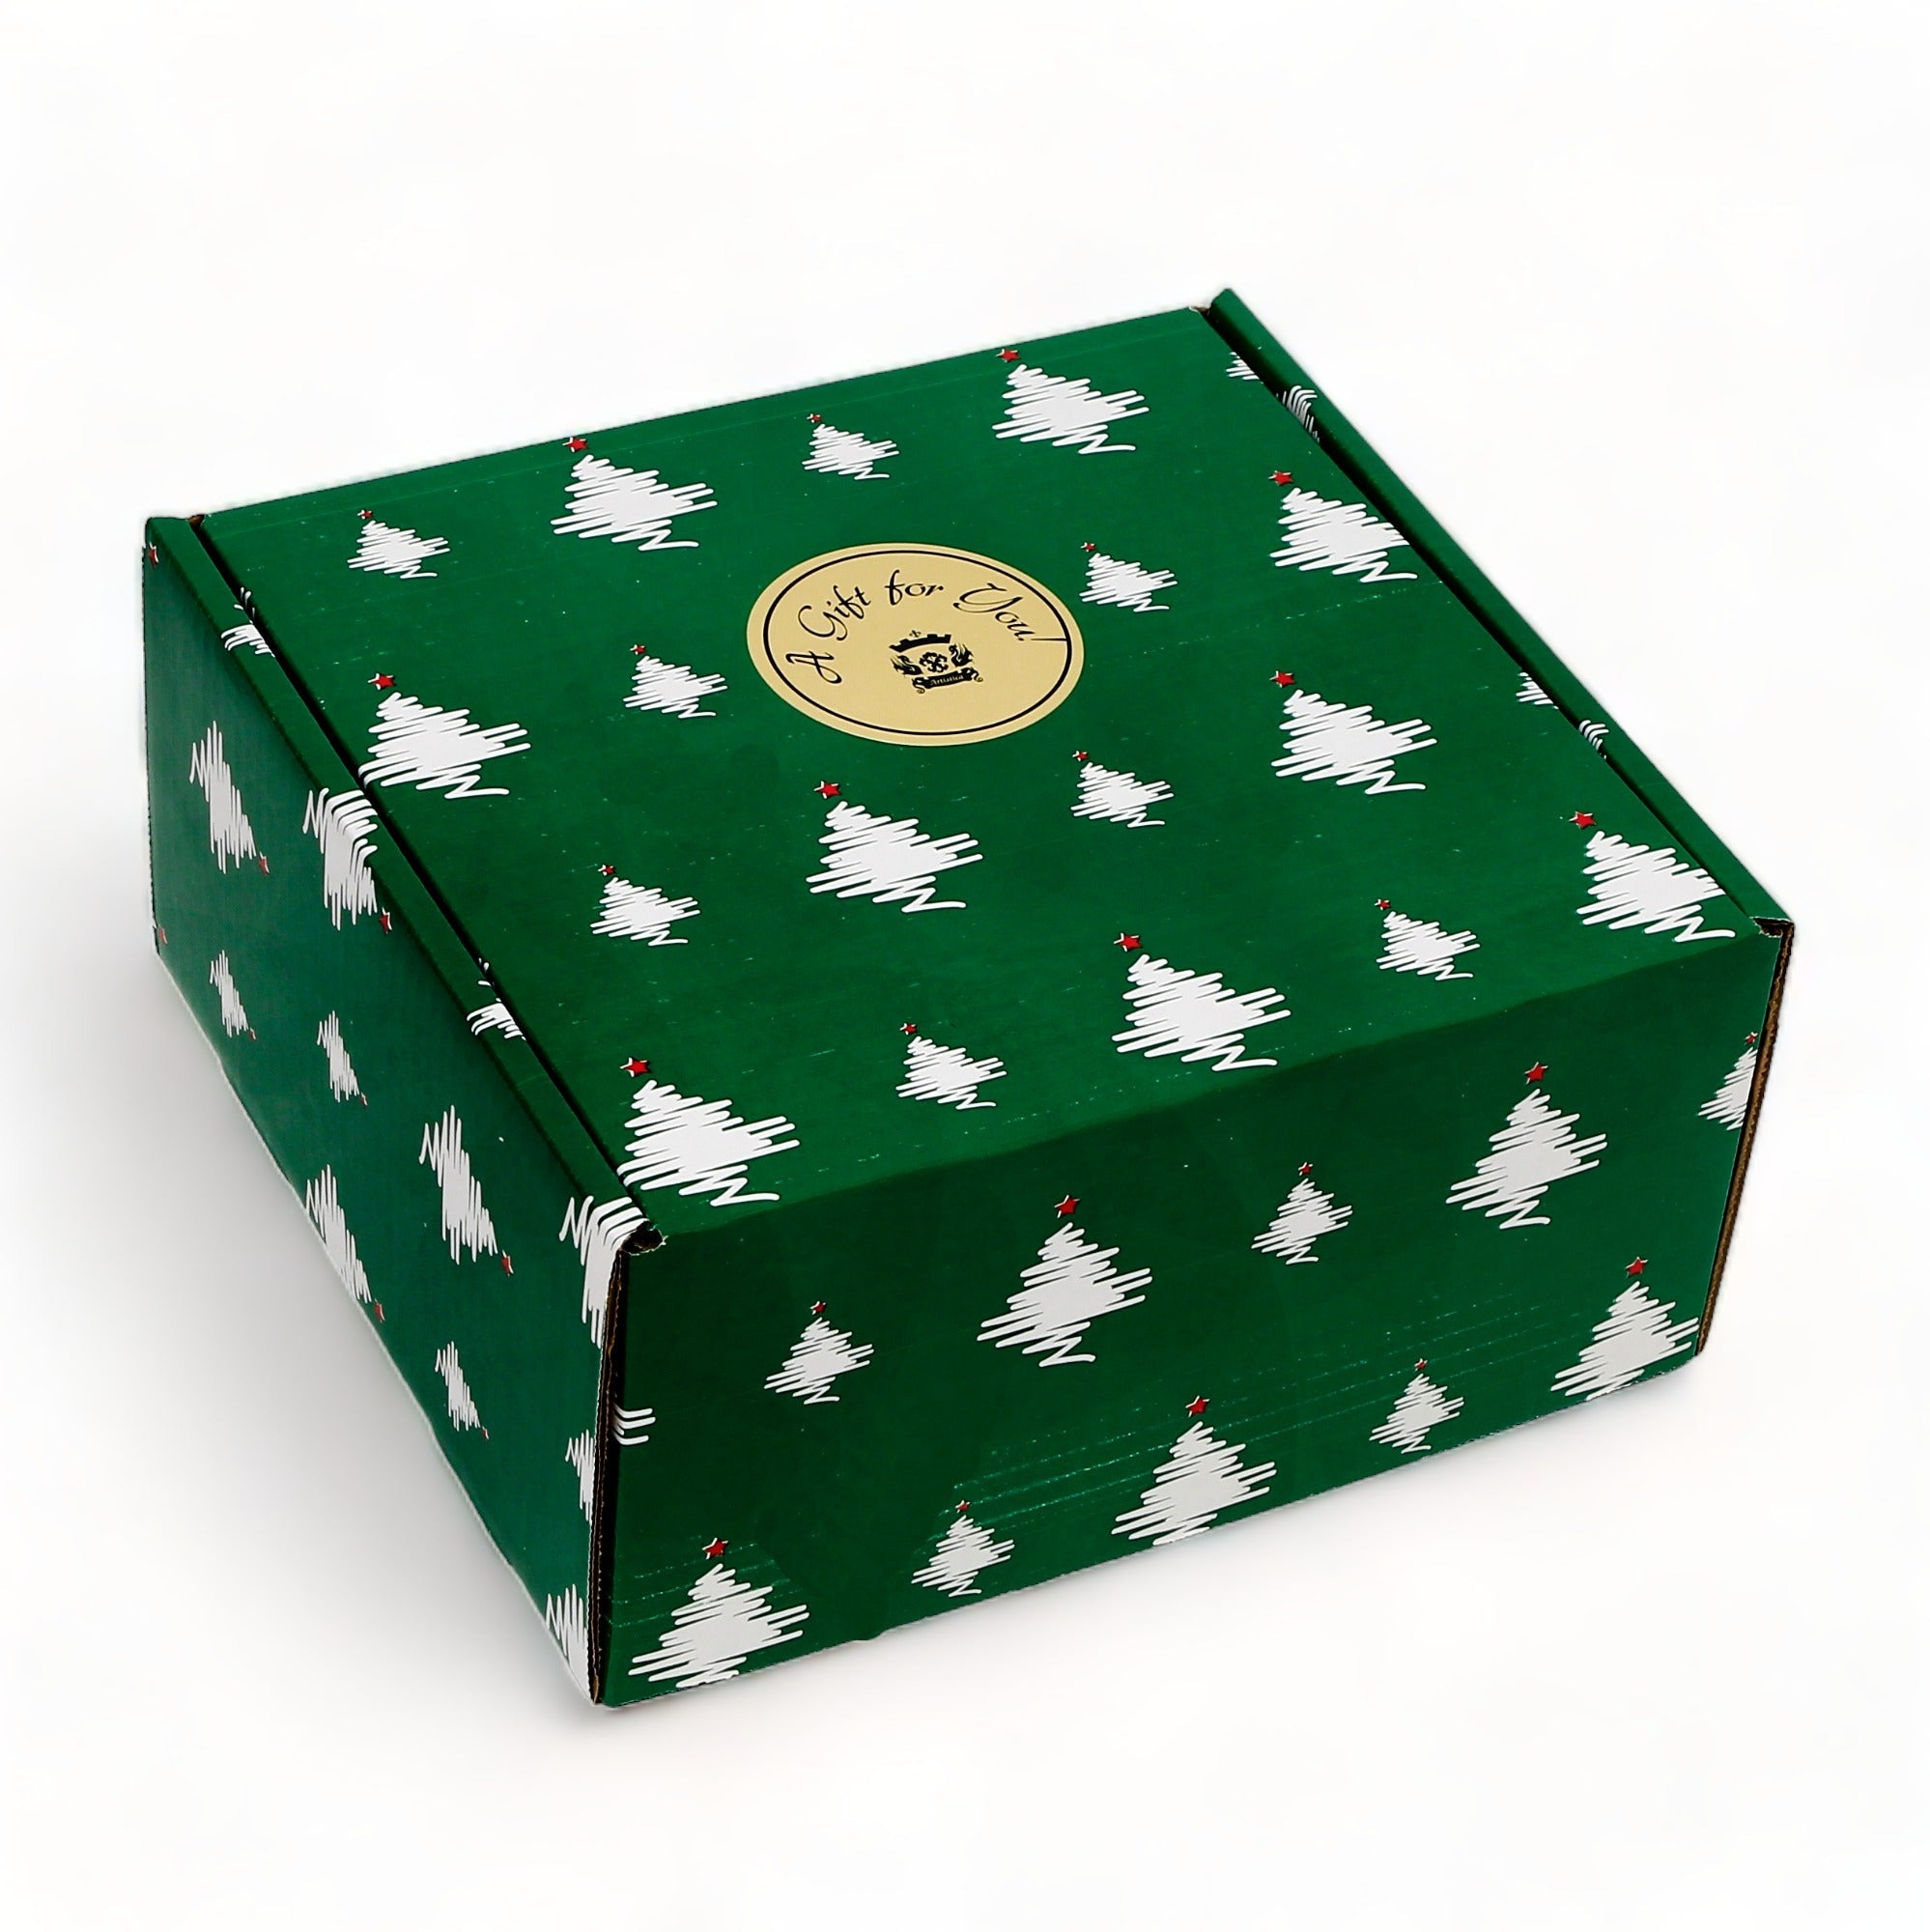 GIFT BOX CHRISTMAS: Green Gift Box with Murano Glass Candles LG. 14 Oz(Set of 2 pcs)